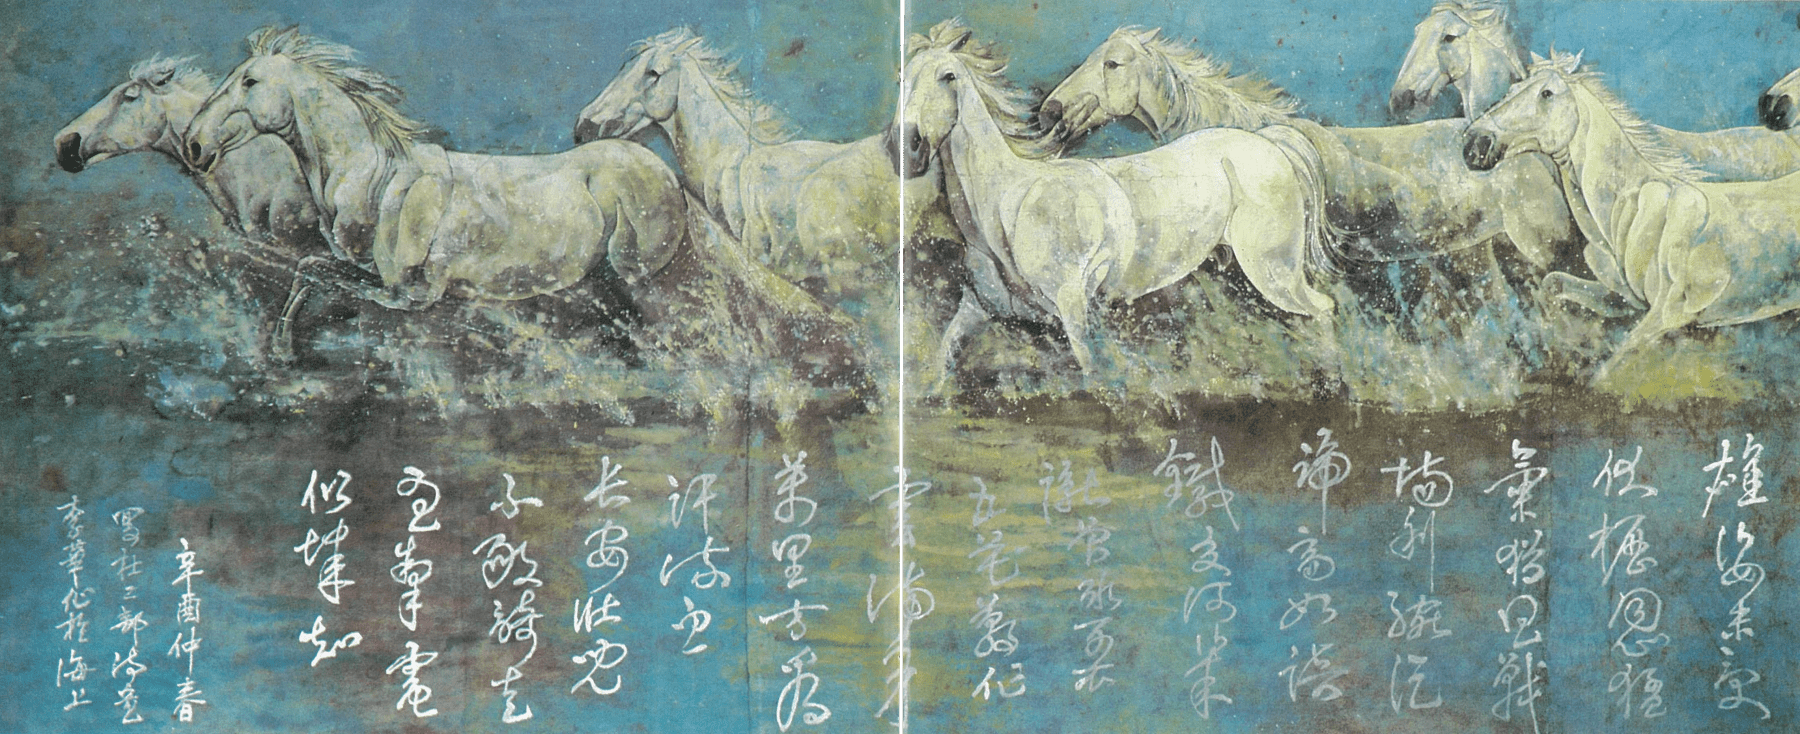 Li Huayi 李華弌, Untitled 《無題》, 1981